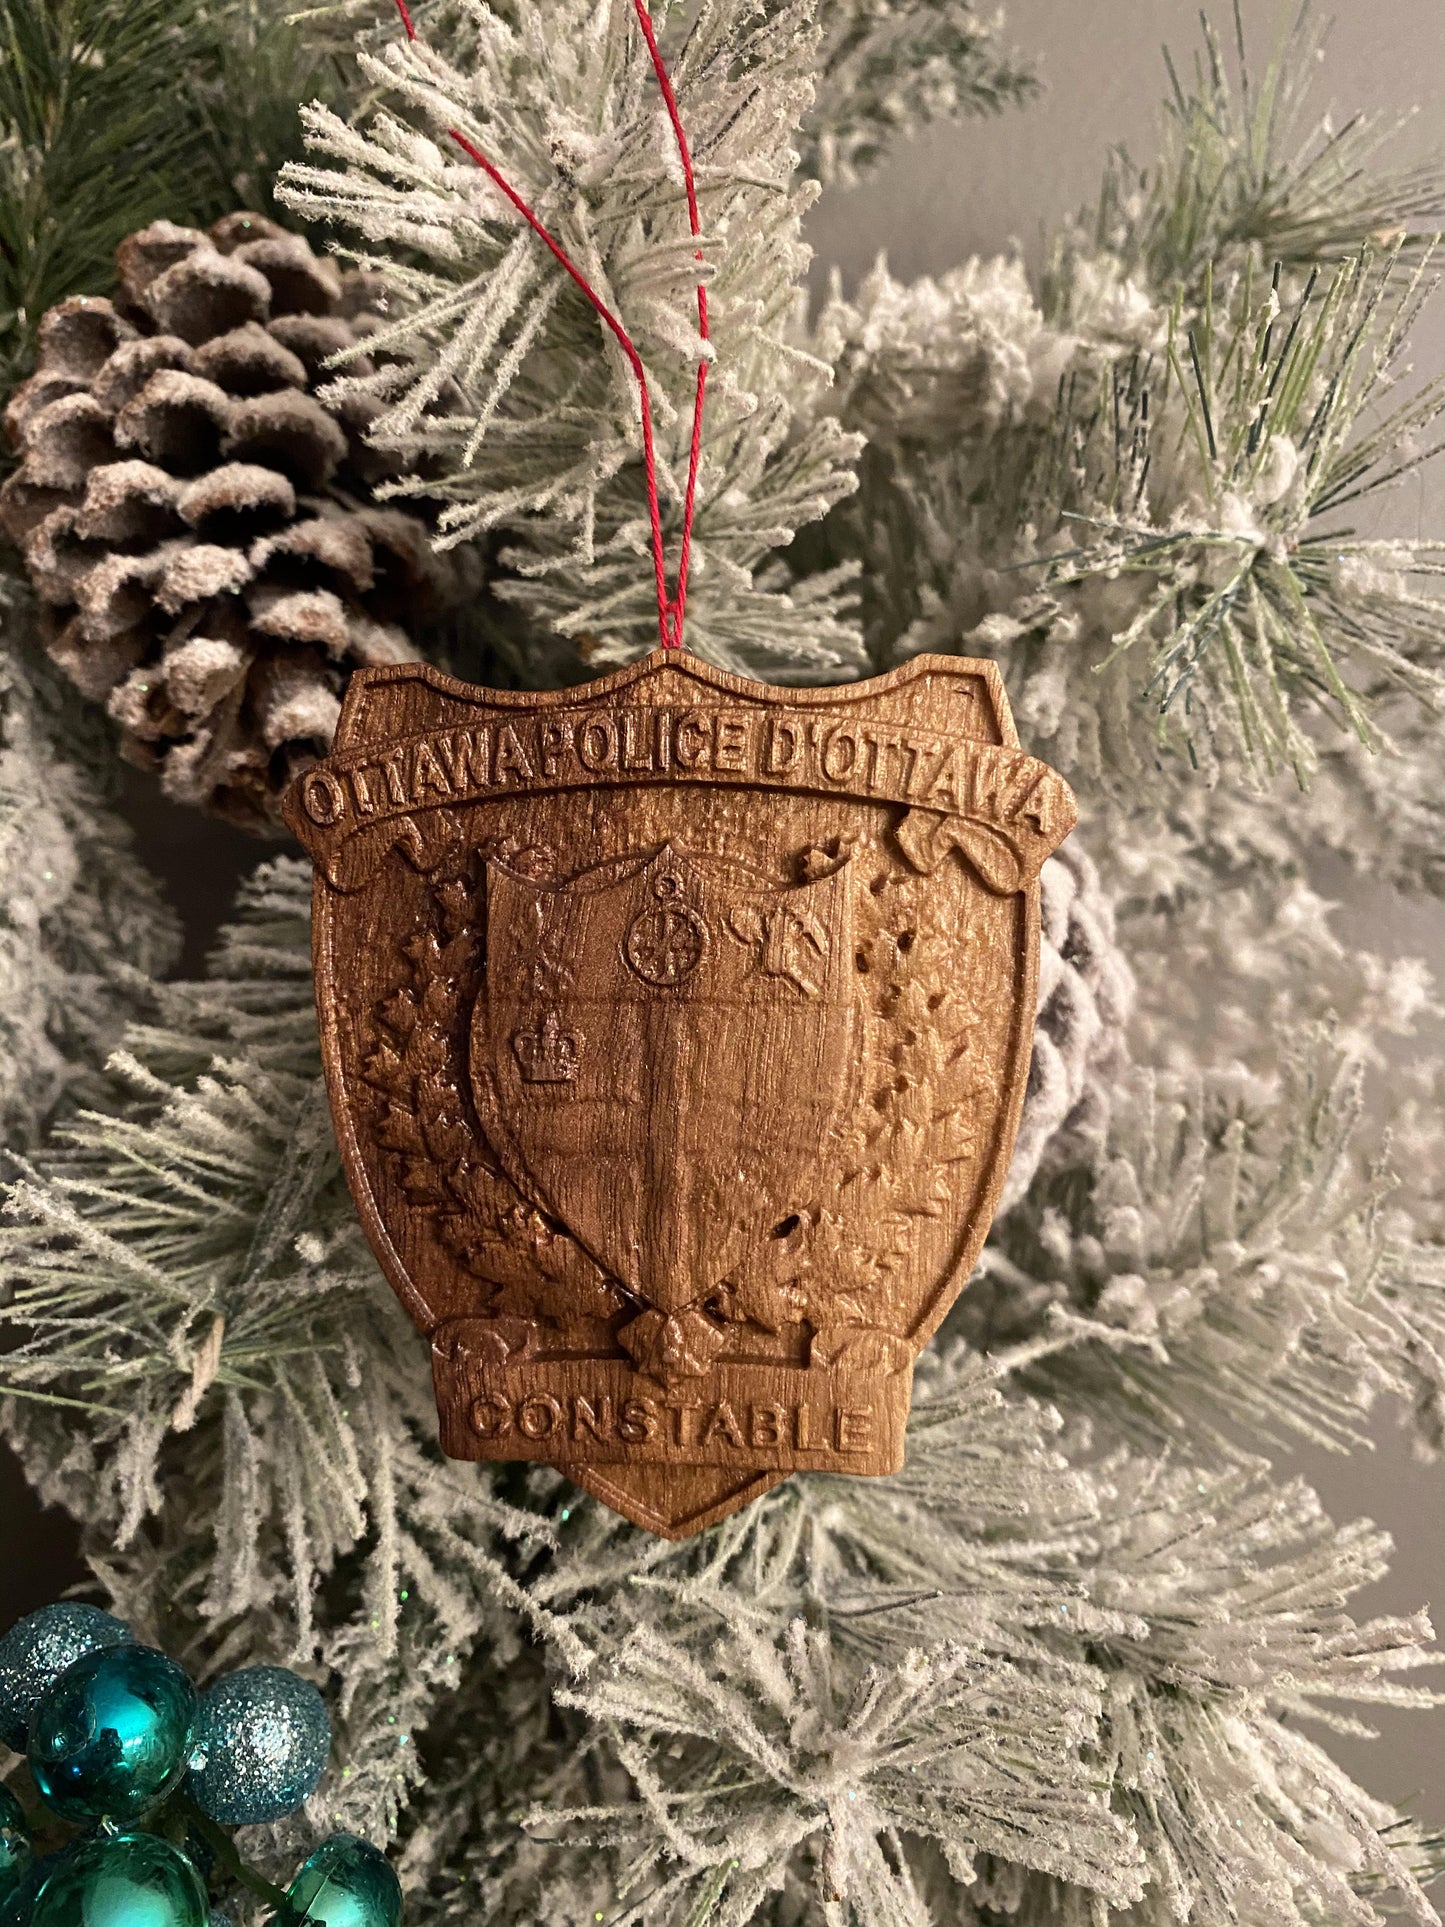 Ottawa Police Christmas Ornament